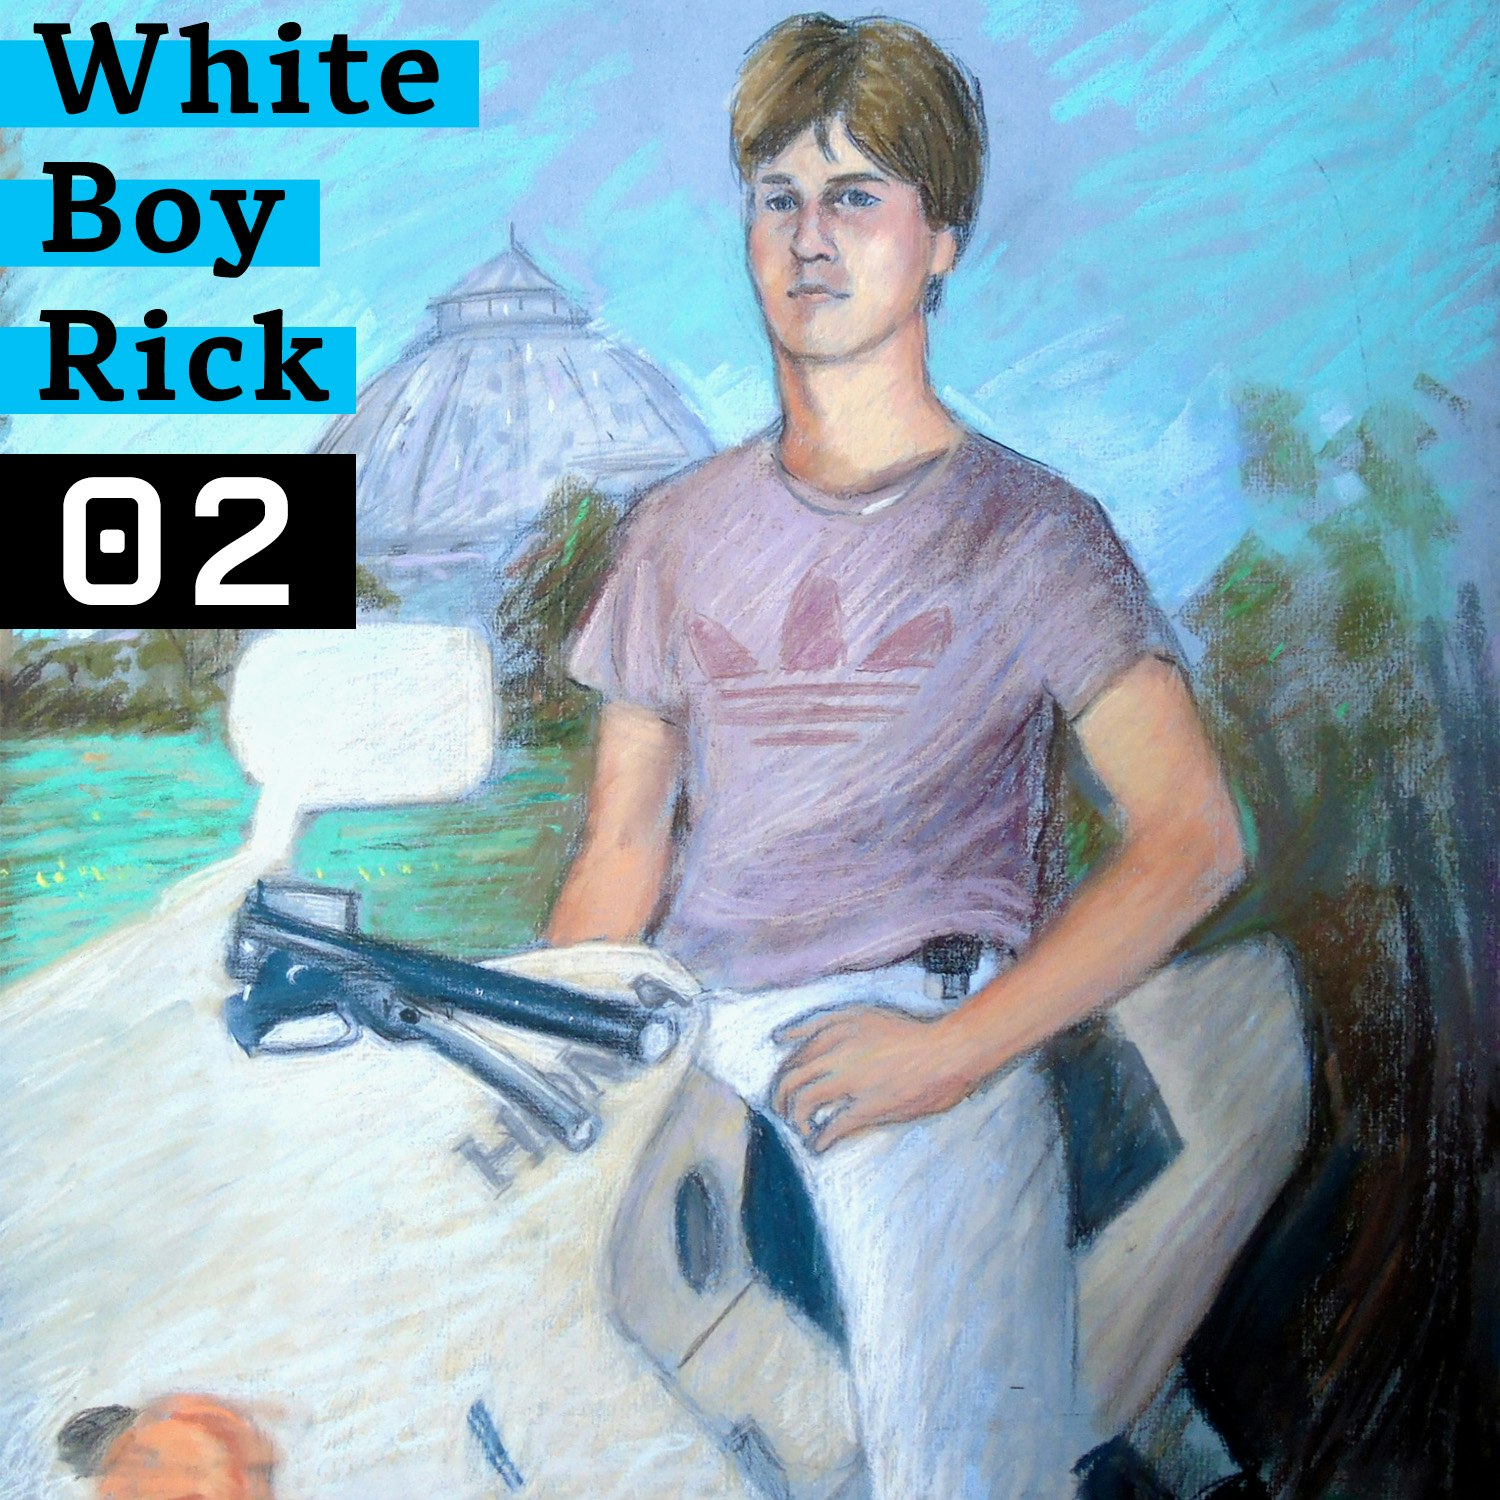 White Boy Rick, Chapter 2 – Summer Job